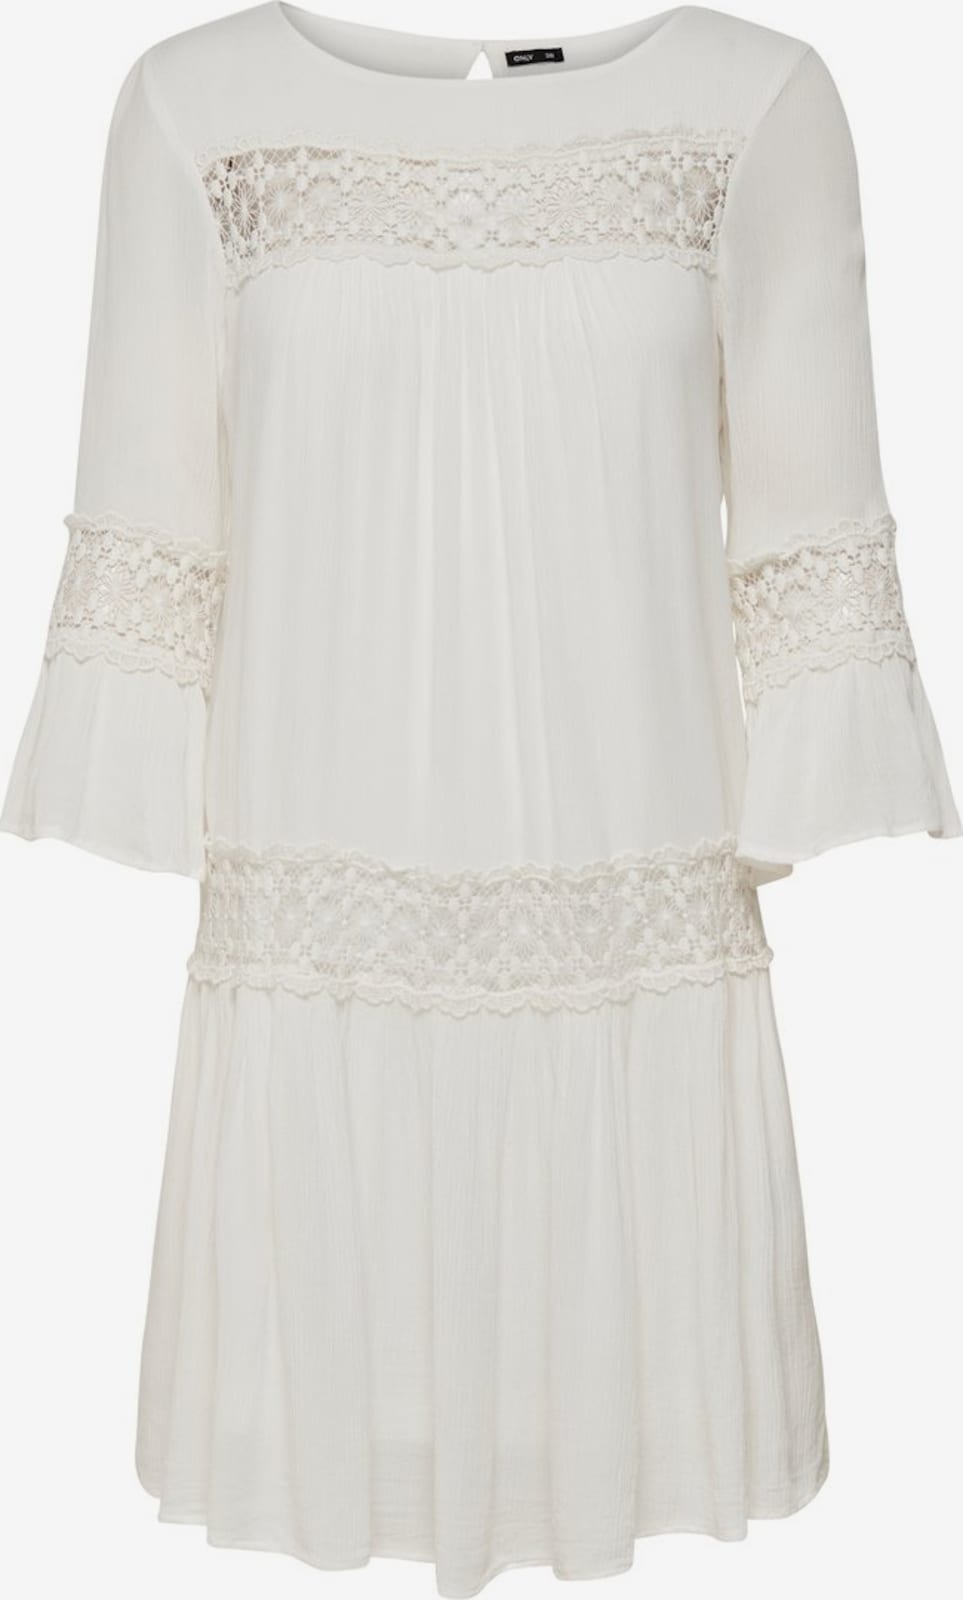 The Best White Dresses To Buy For Spring & Summer 2020 - Jennysgou